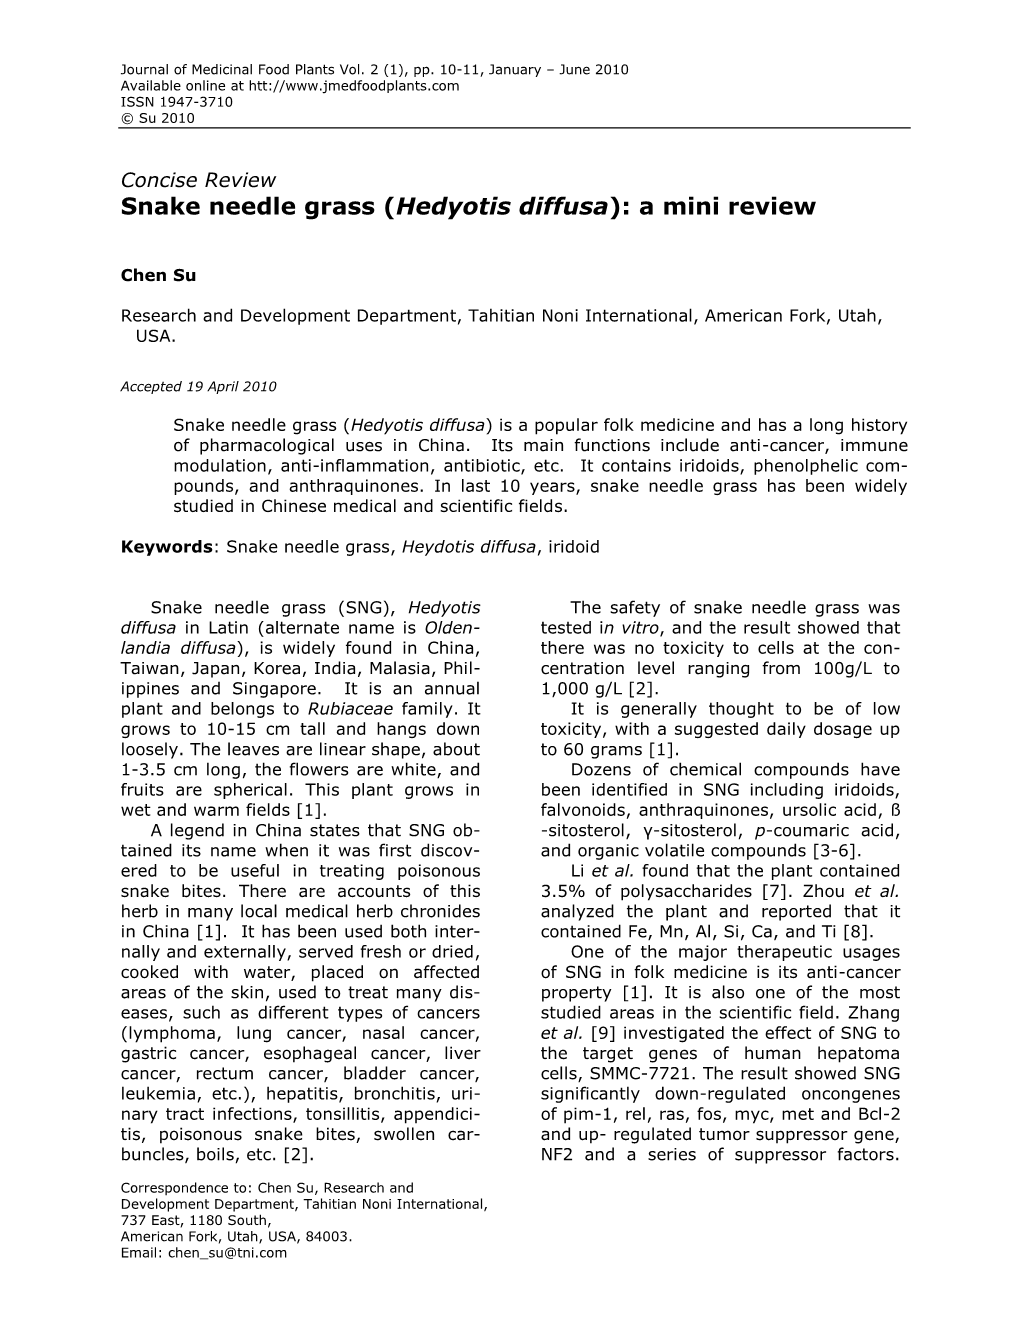 Hedyotis Diffusa): a Mini Review